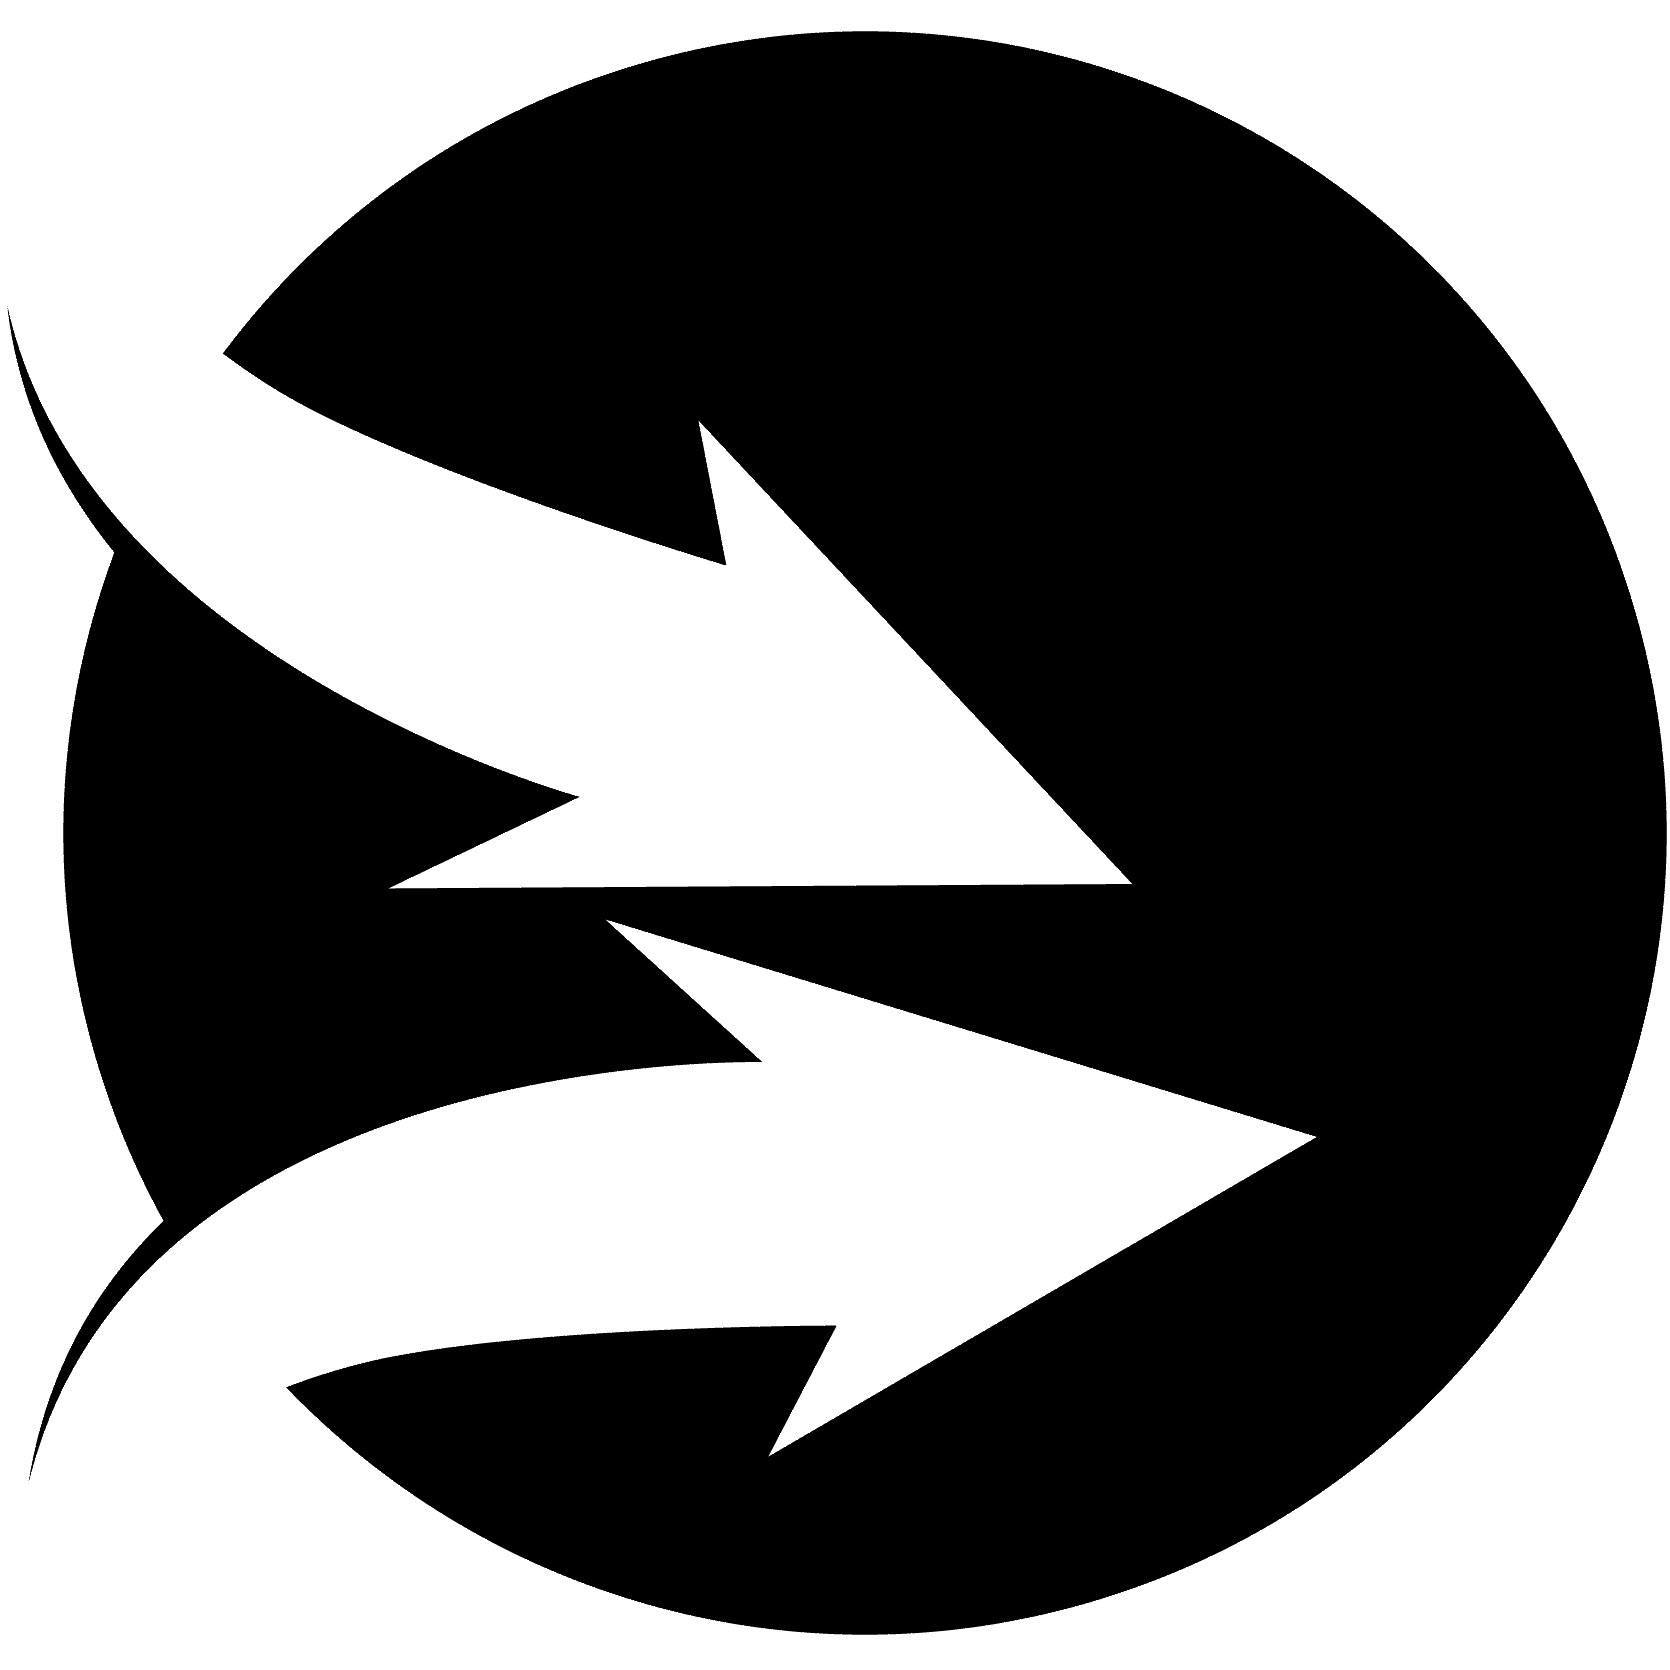 Converge Accessibility logo